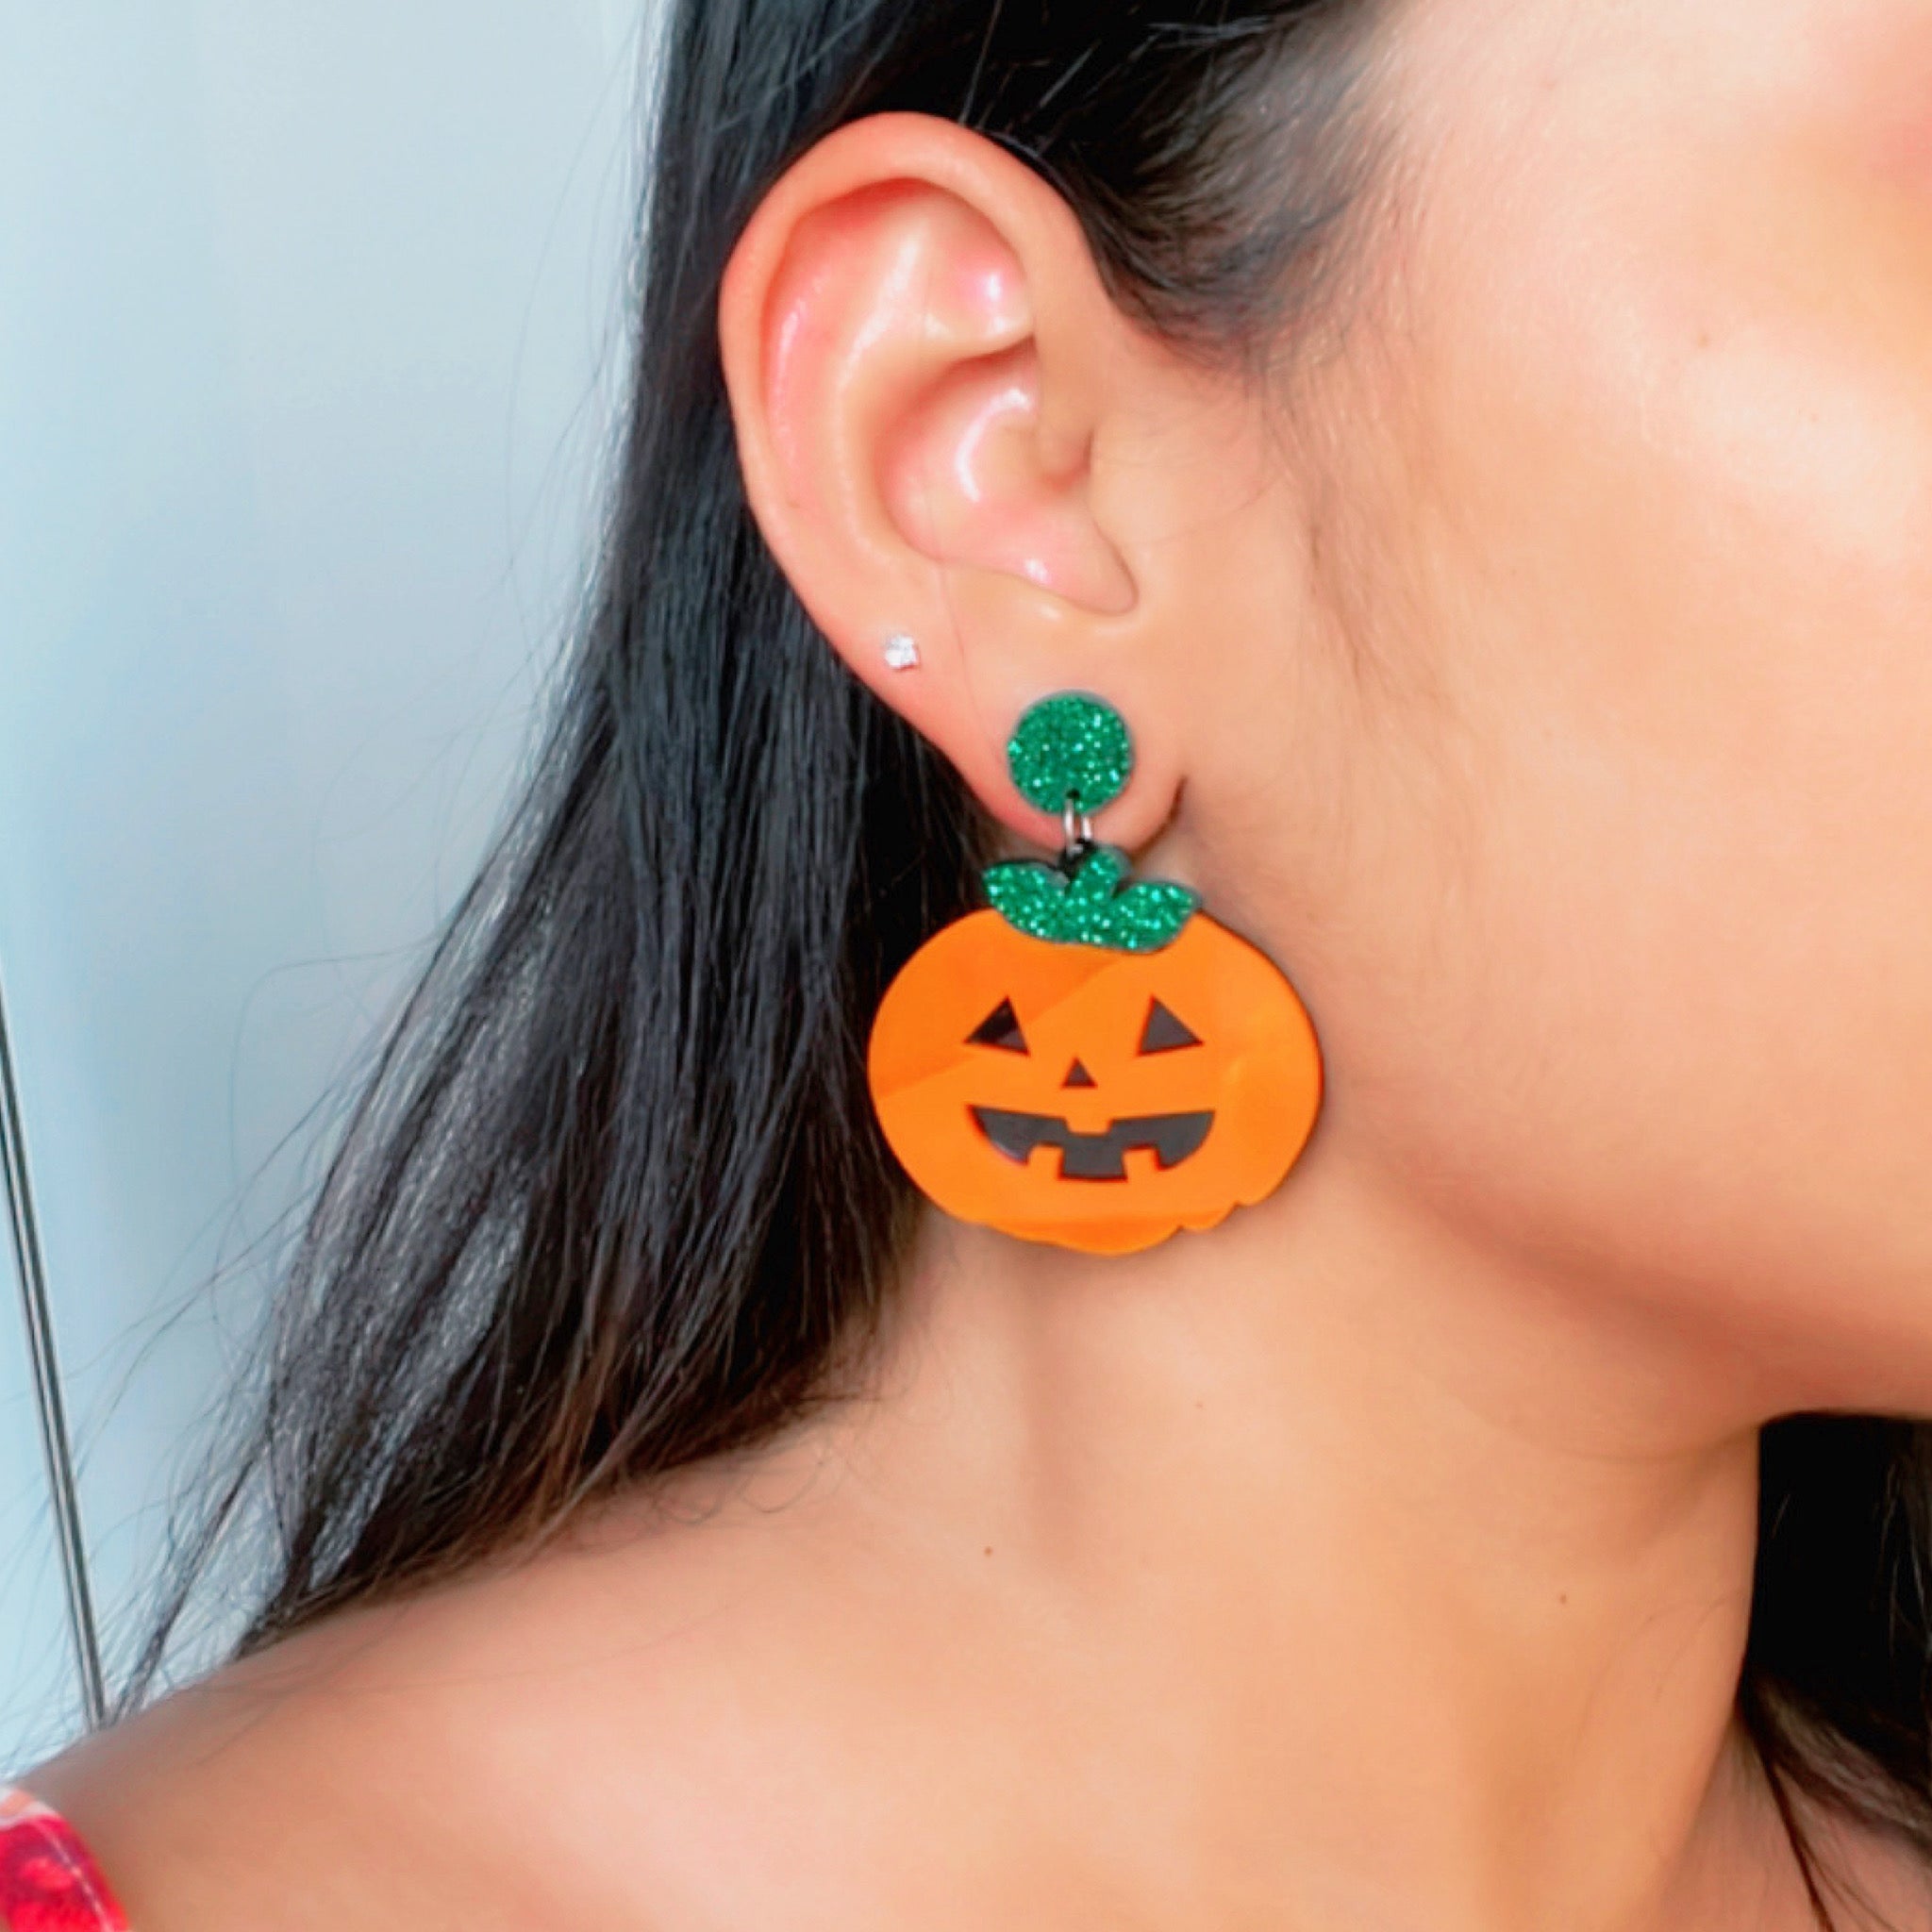 Plumpy Pumpkin Earrings - Orange, Black and Shimmer Green - Nian by Nidhi - worn by a woman